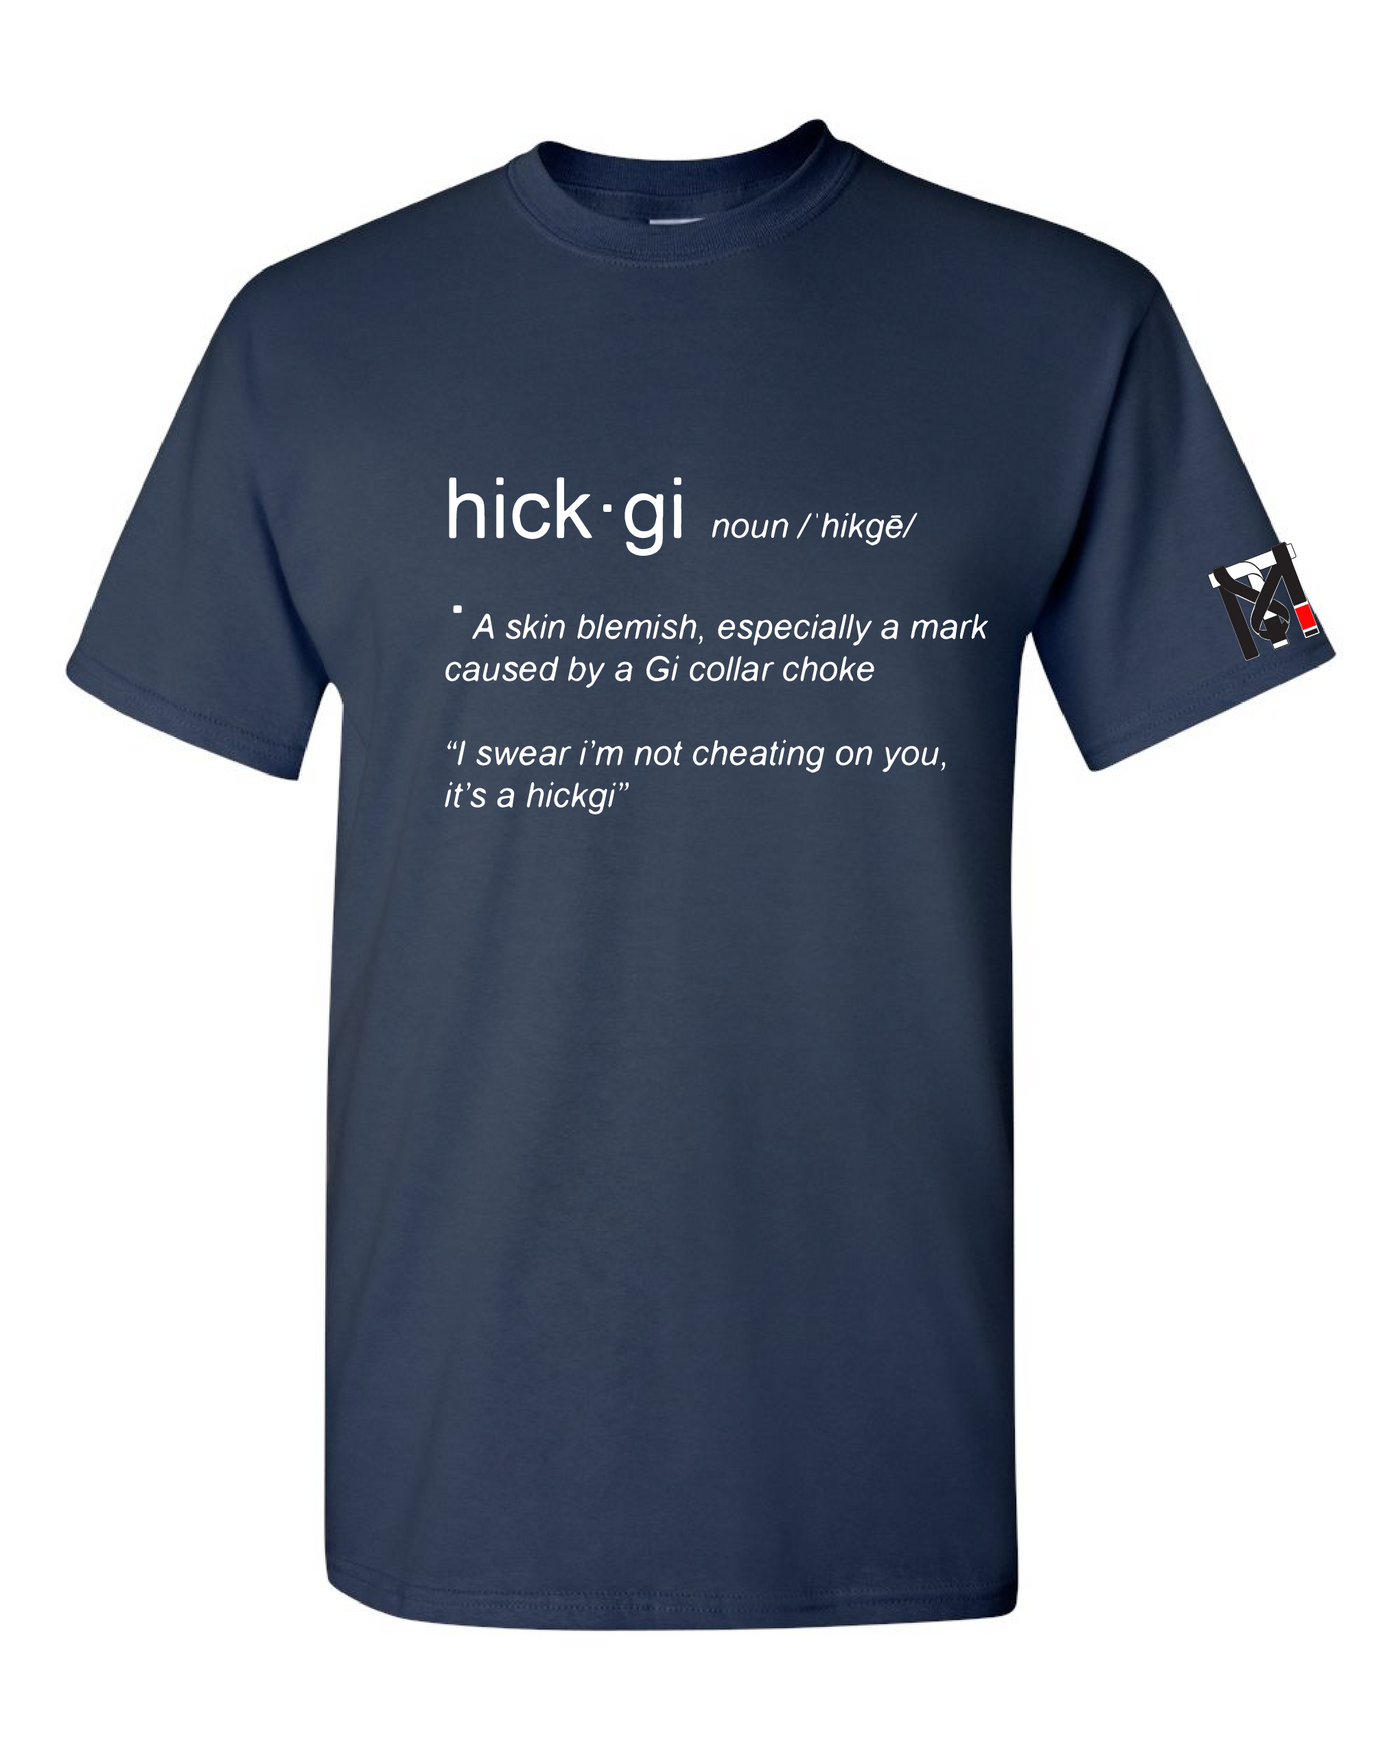 The Hick-Gi Shirt Top Mount Jiu Jitsu LIfestyle Apparel